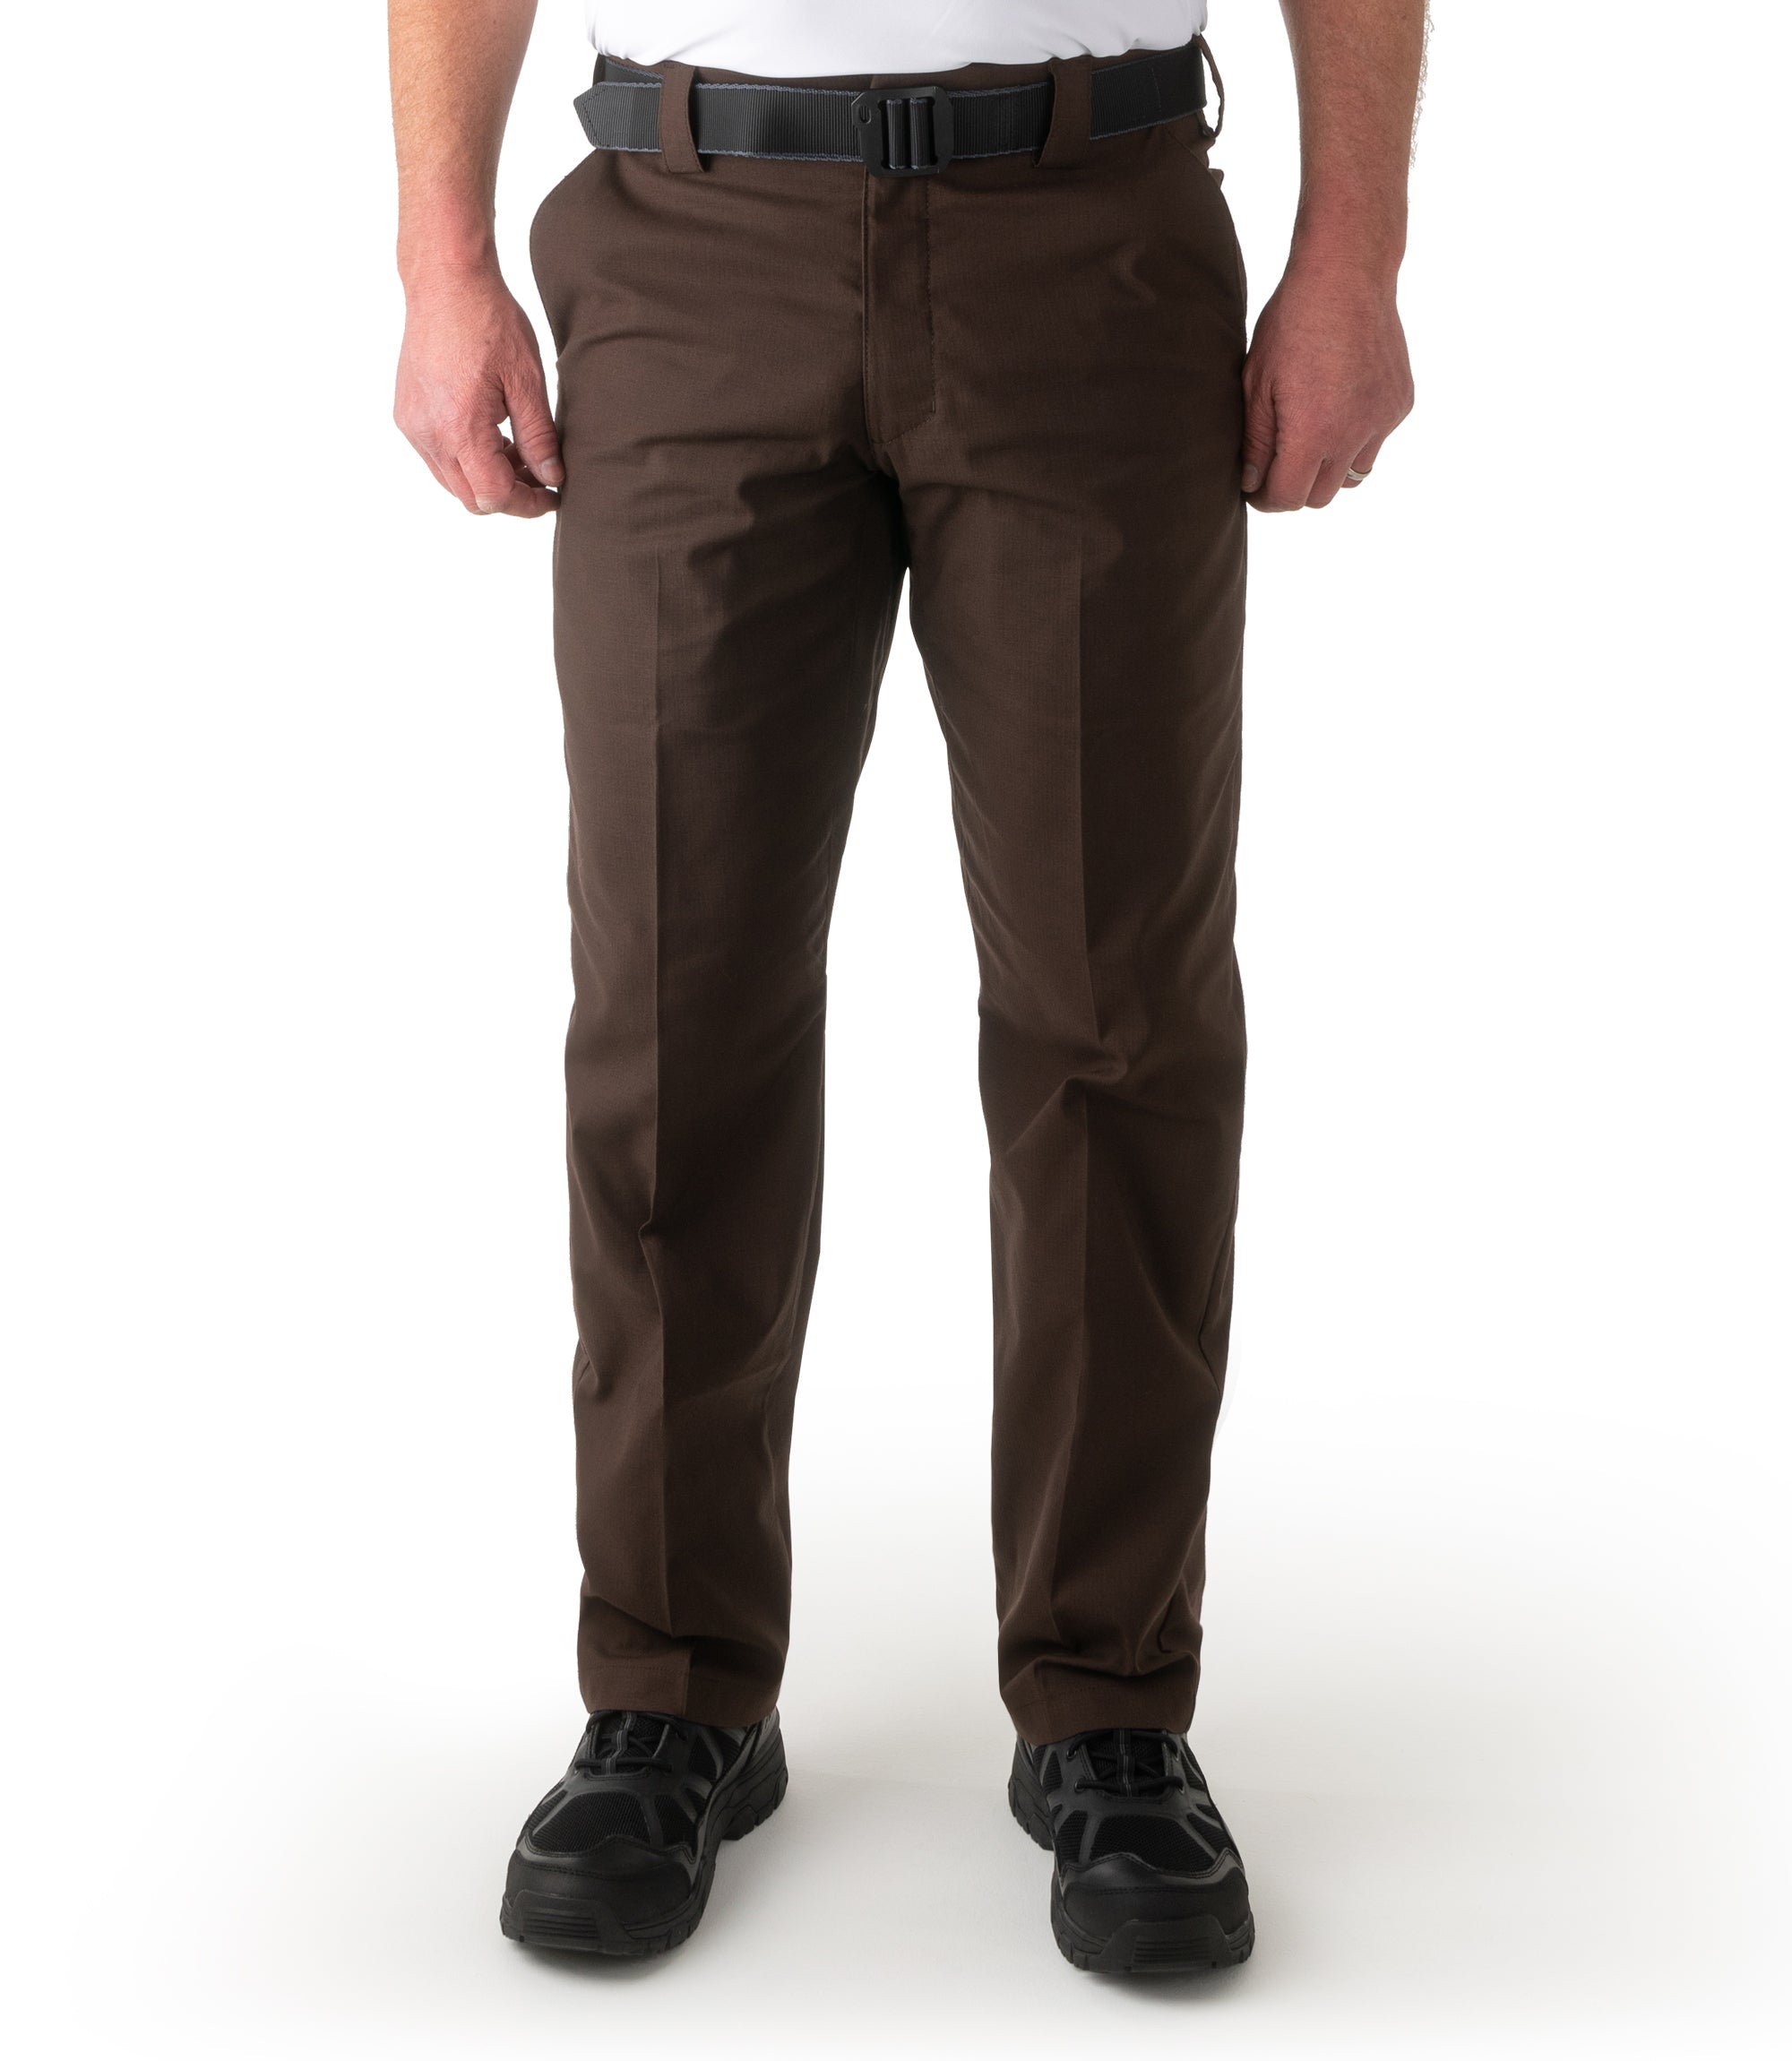 Kodiak - Workwear Trousers for Men